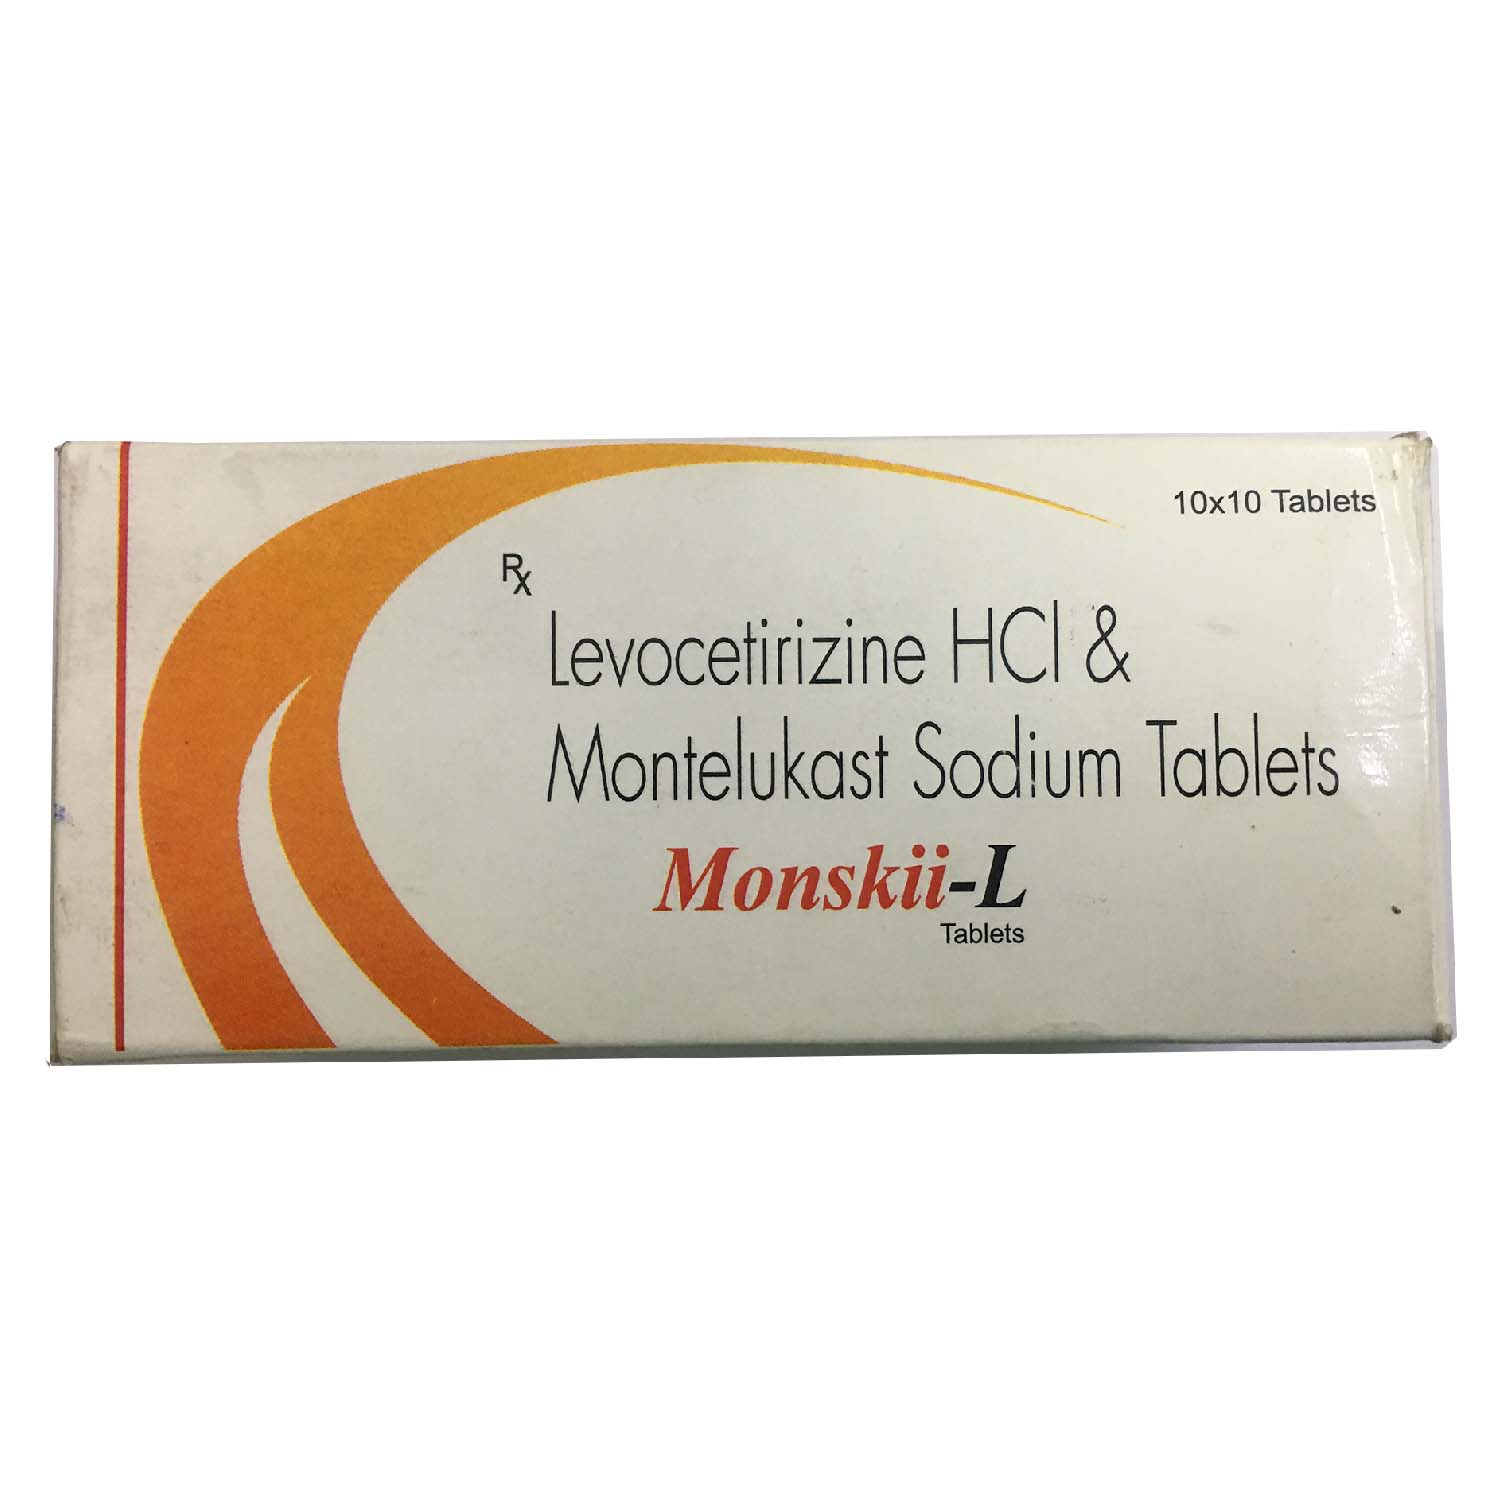 Monskii-L Tablets